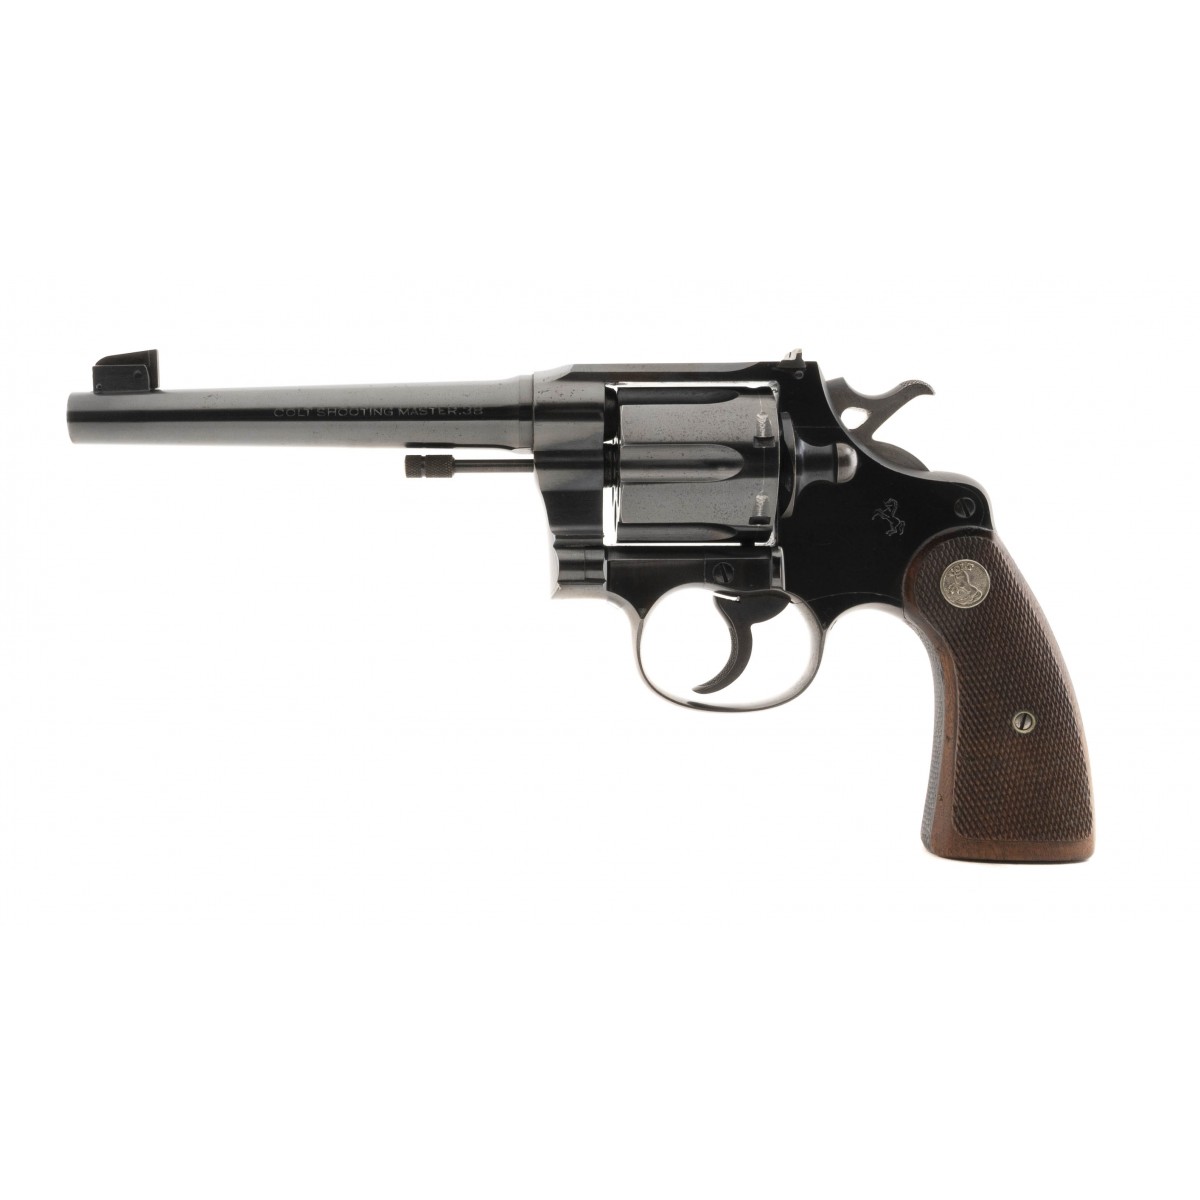 Colt Shooting Master .38 Special caliber revolver for sale.